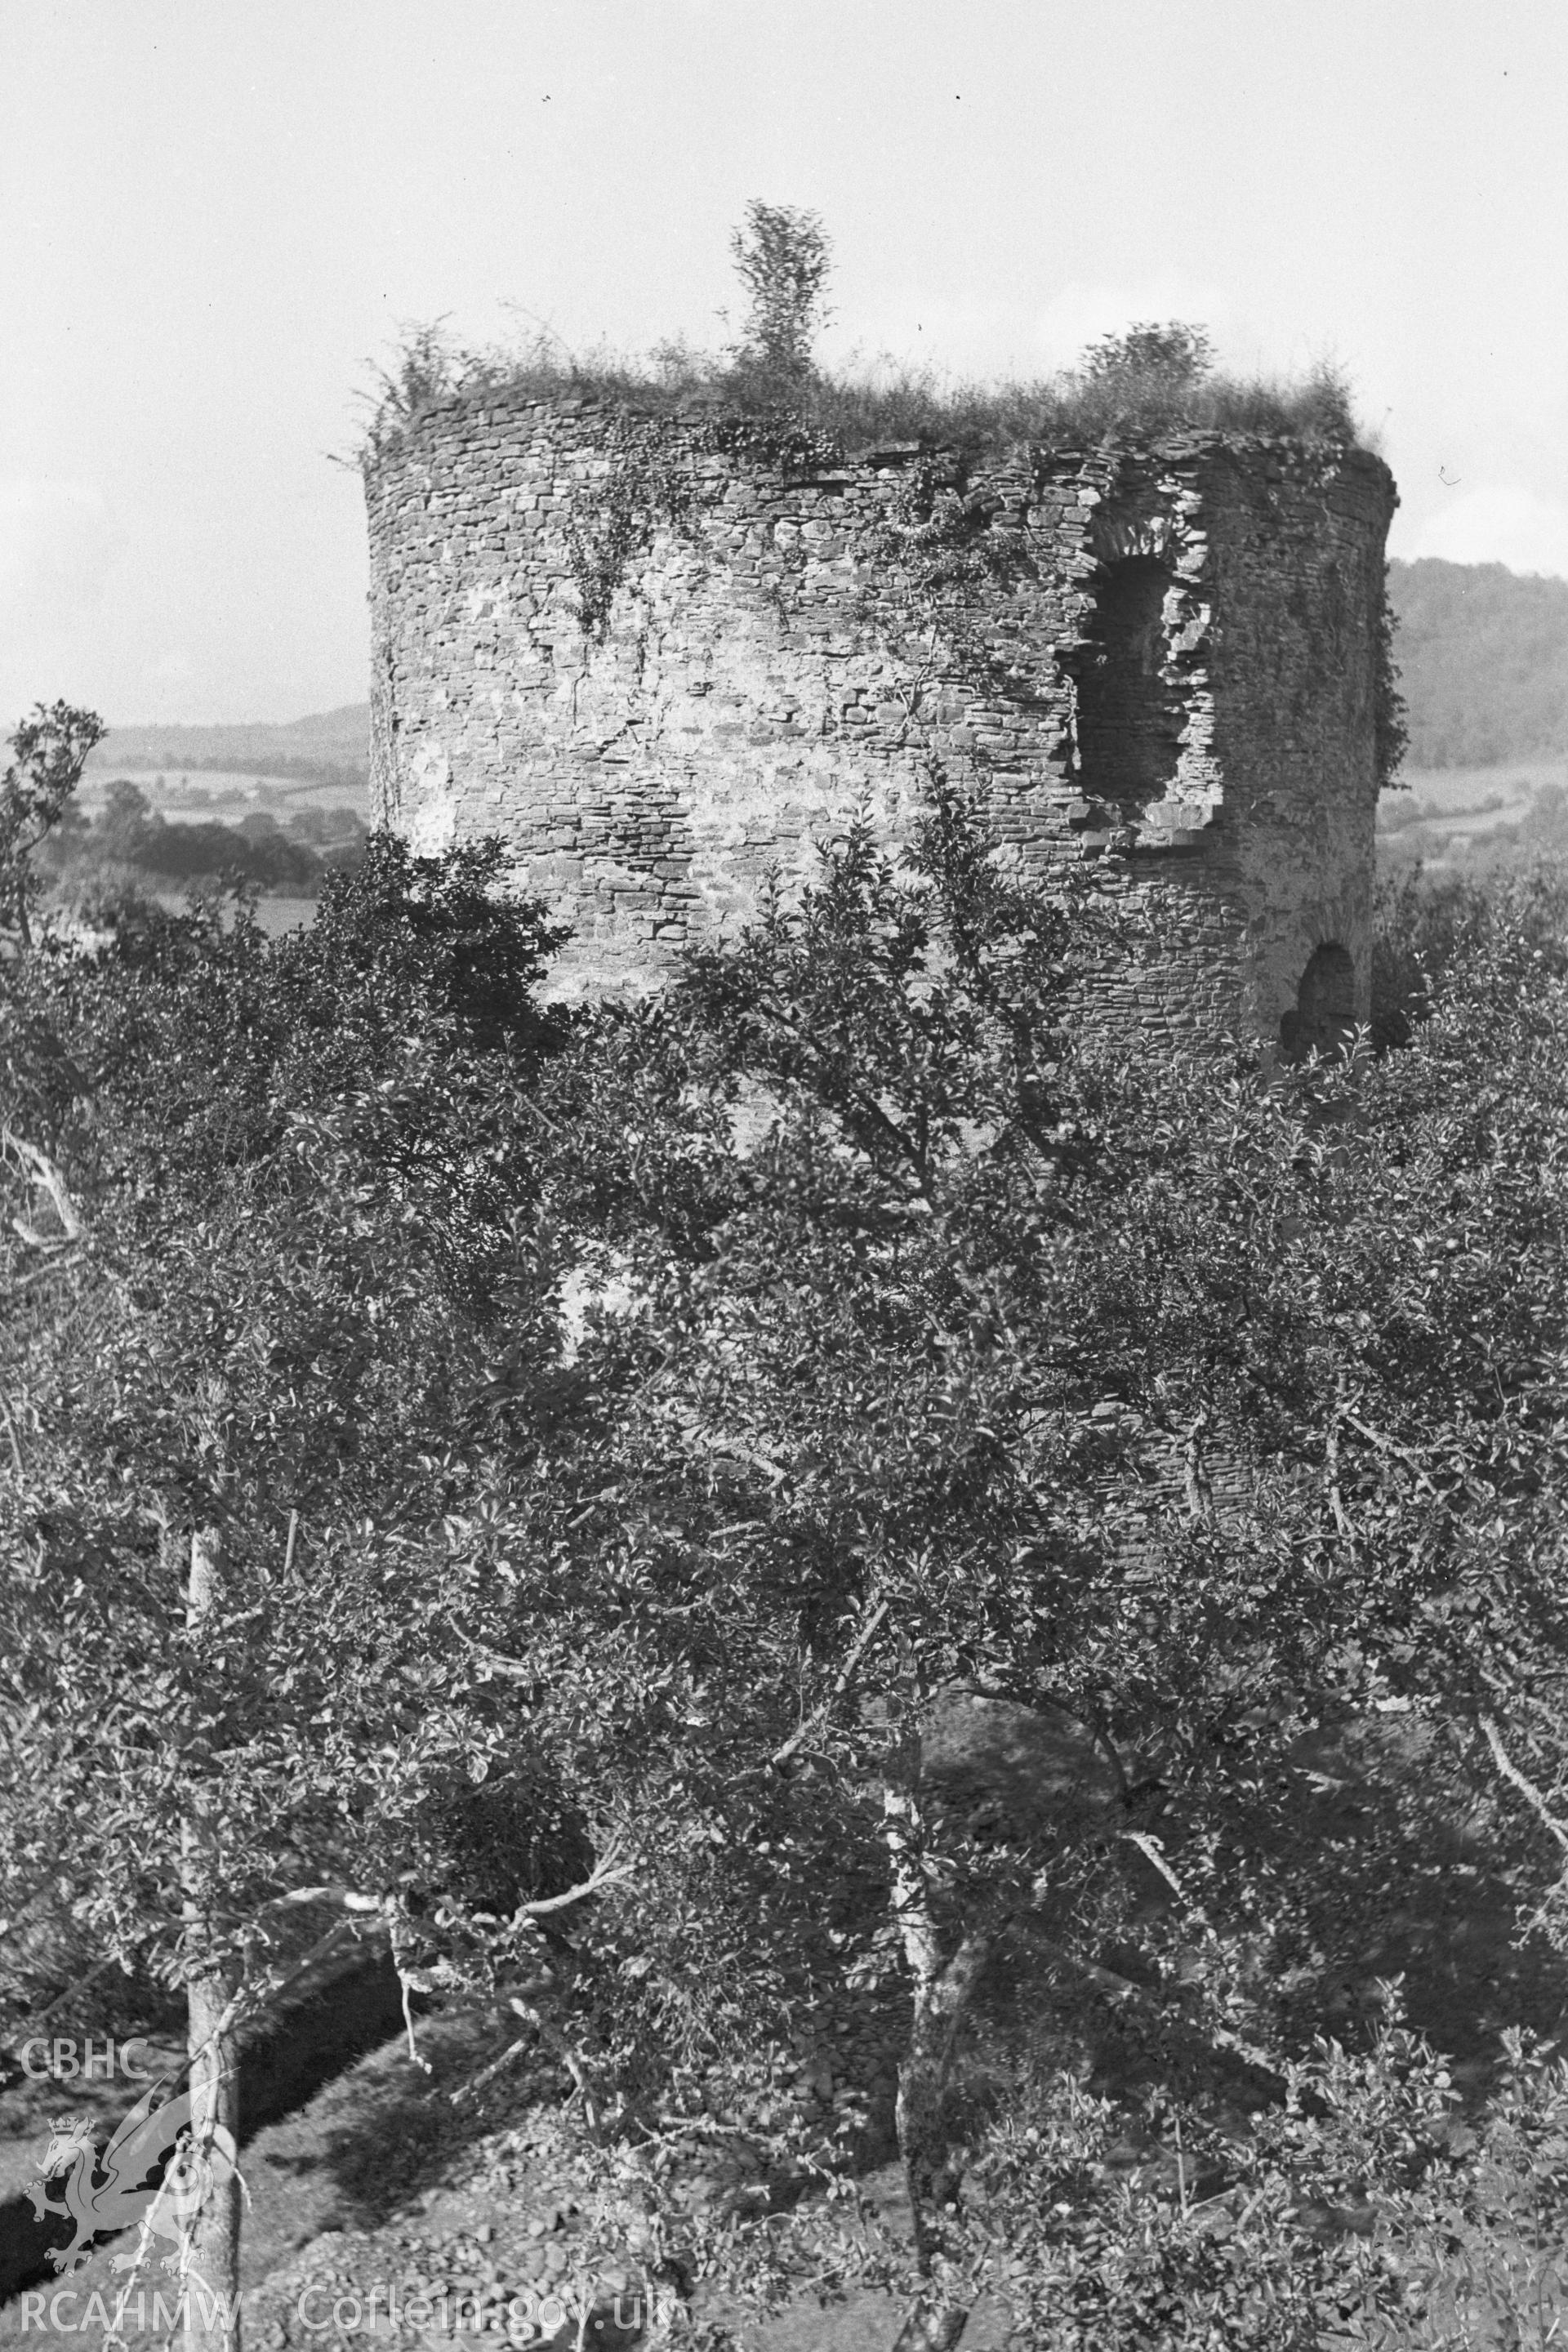 Digital copy of a nitrate negative showing view of Skenfrith Castle taken by Leonard Monroe.